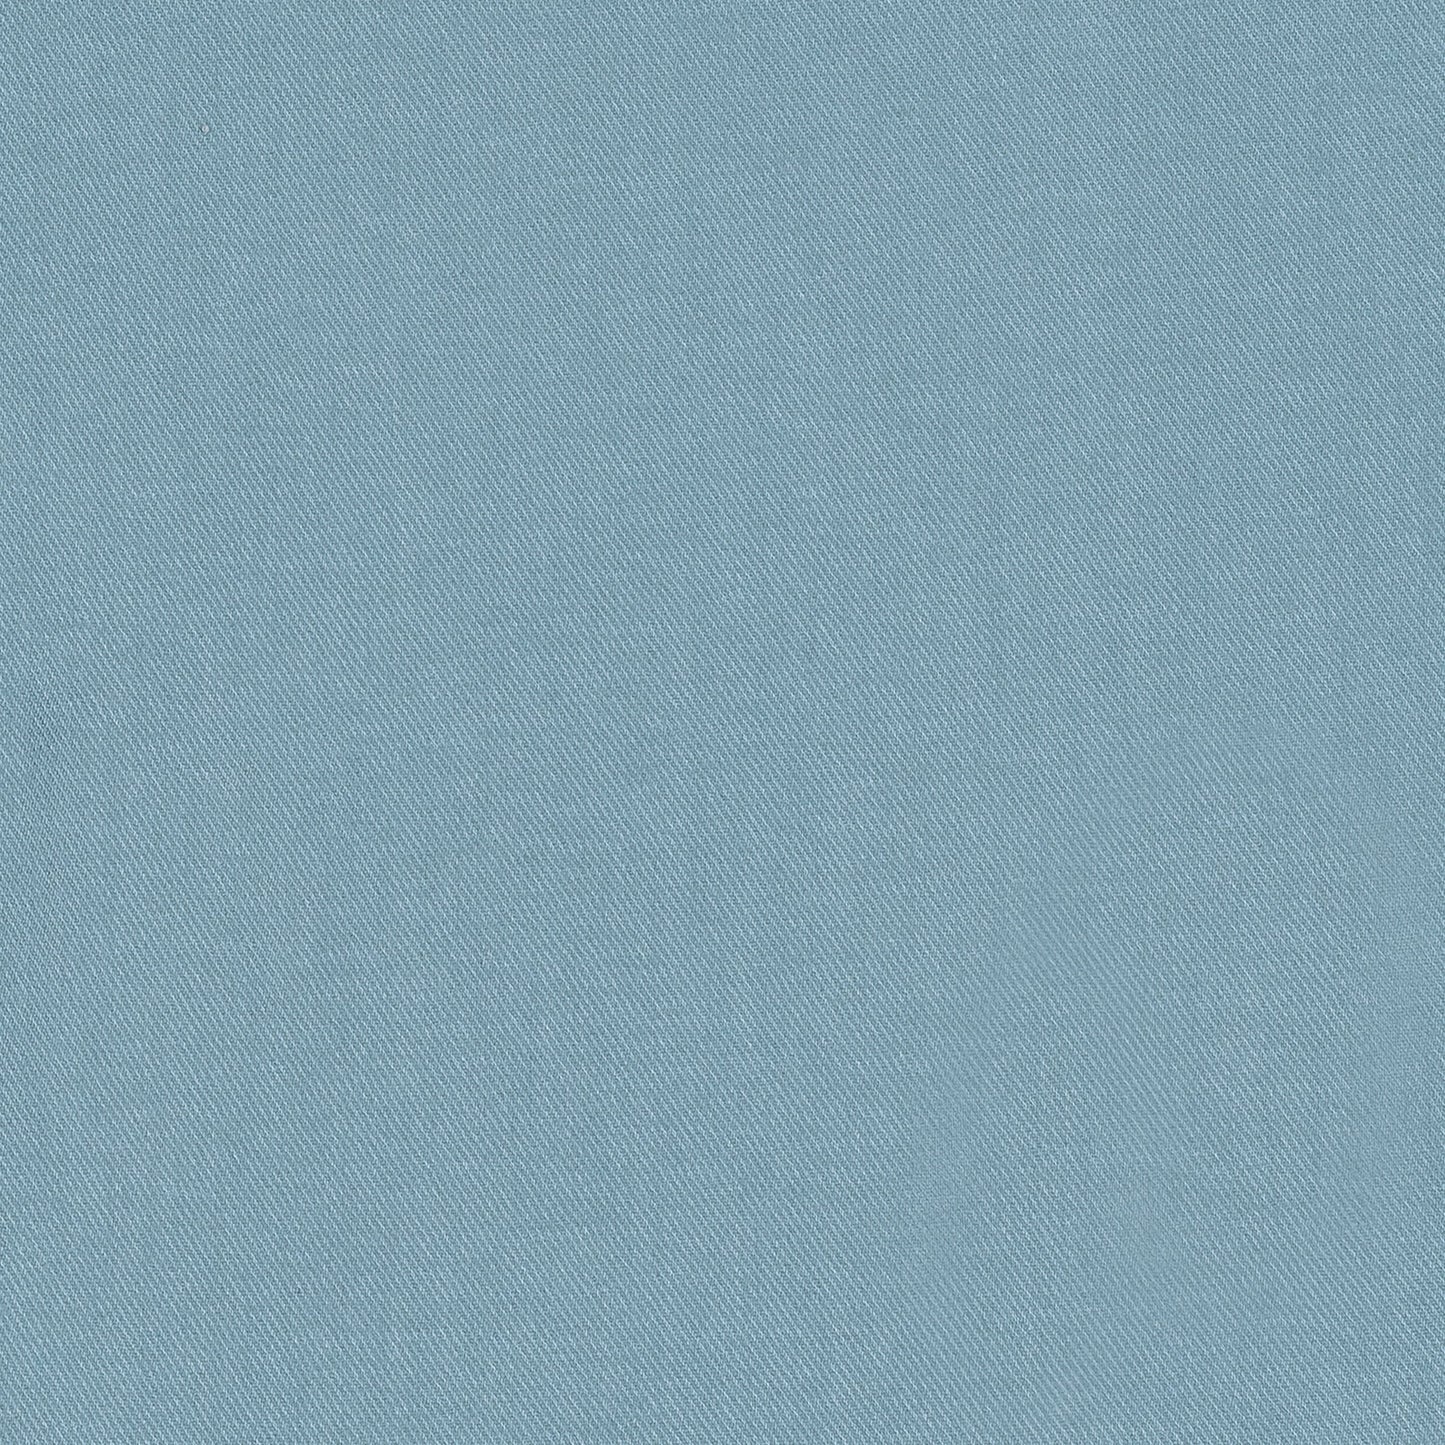 Blank Slate blue color